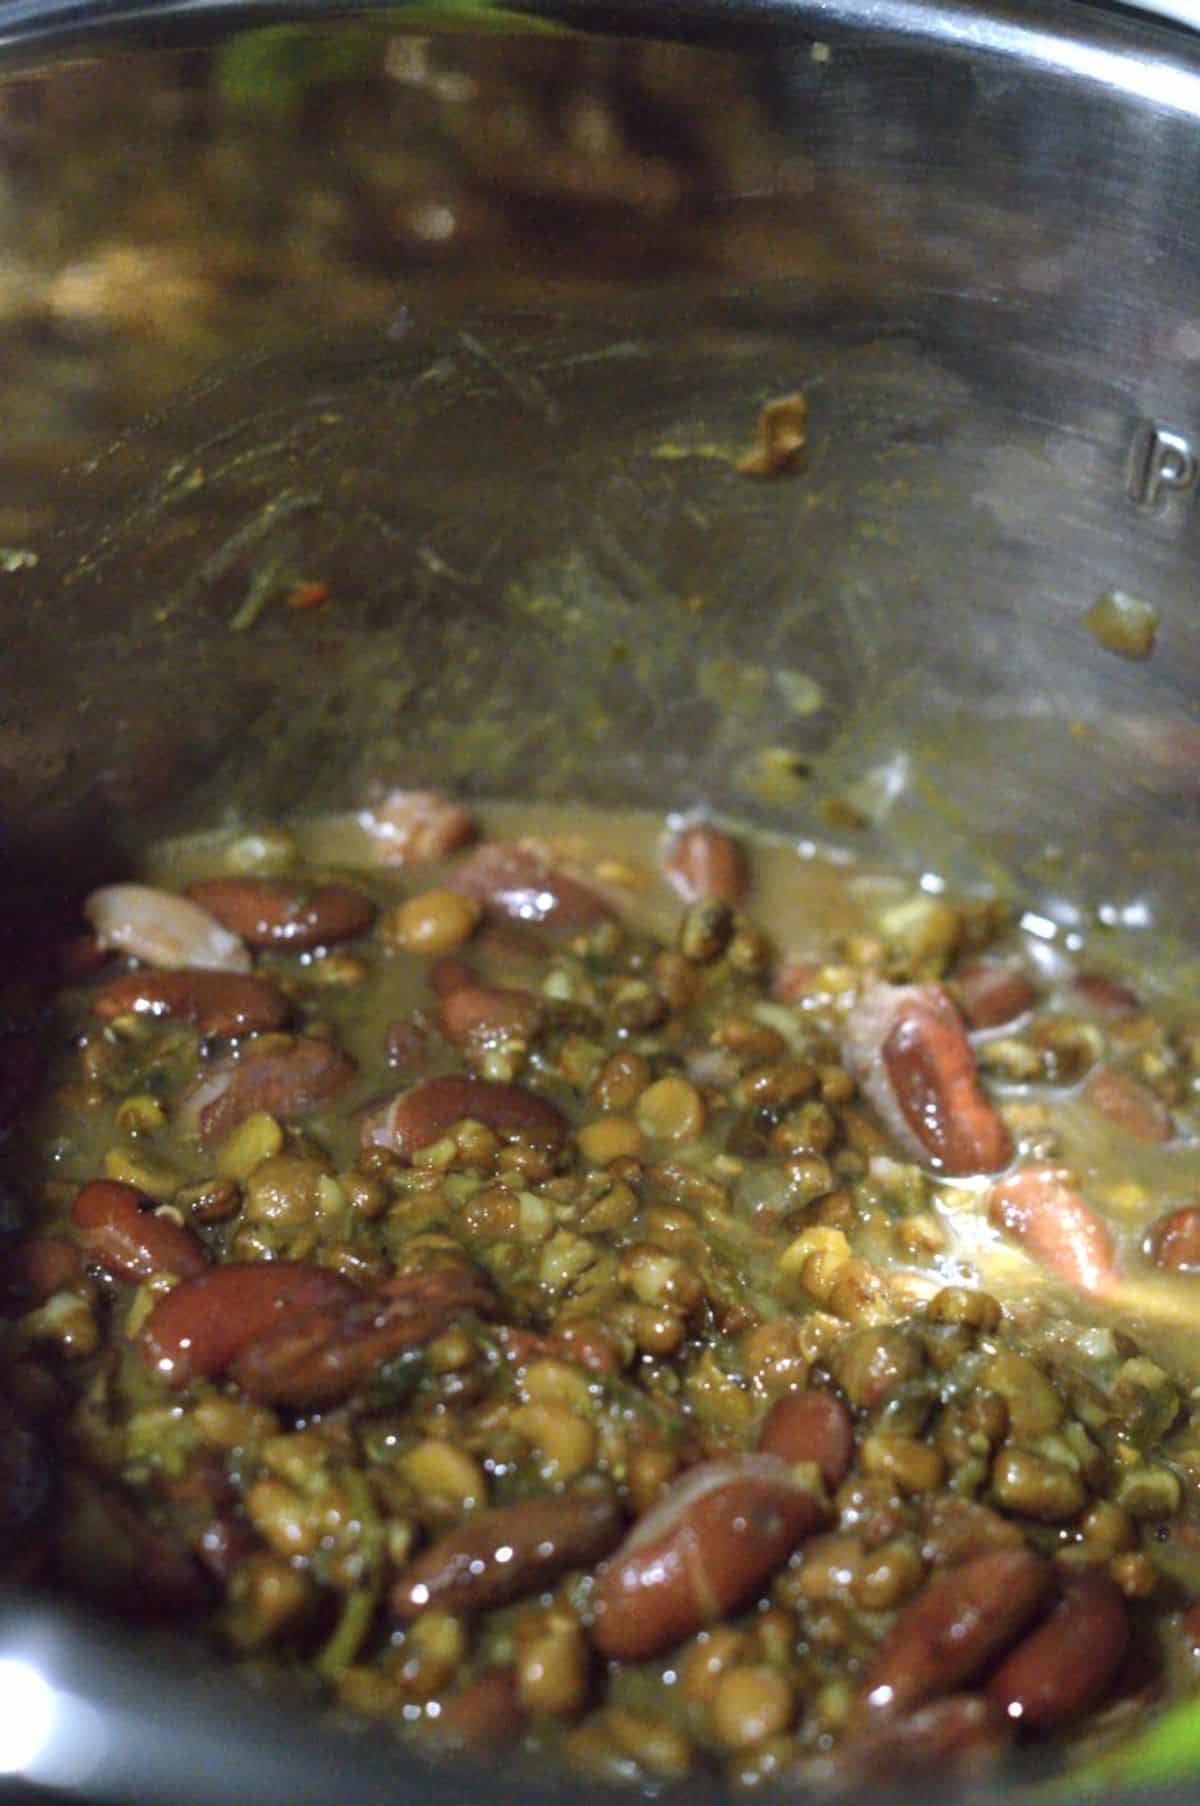 Dal Makhni ingredients cooking in a pot.